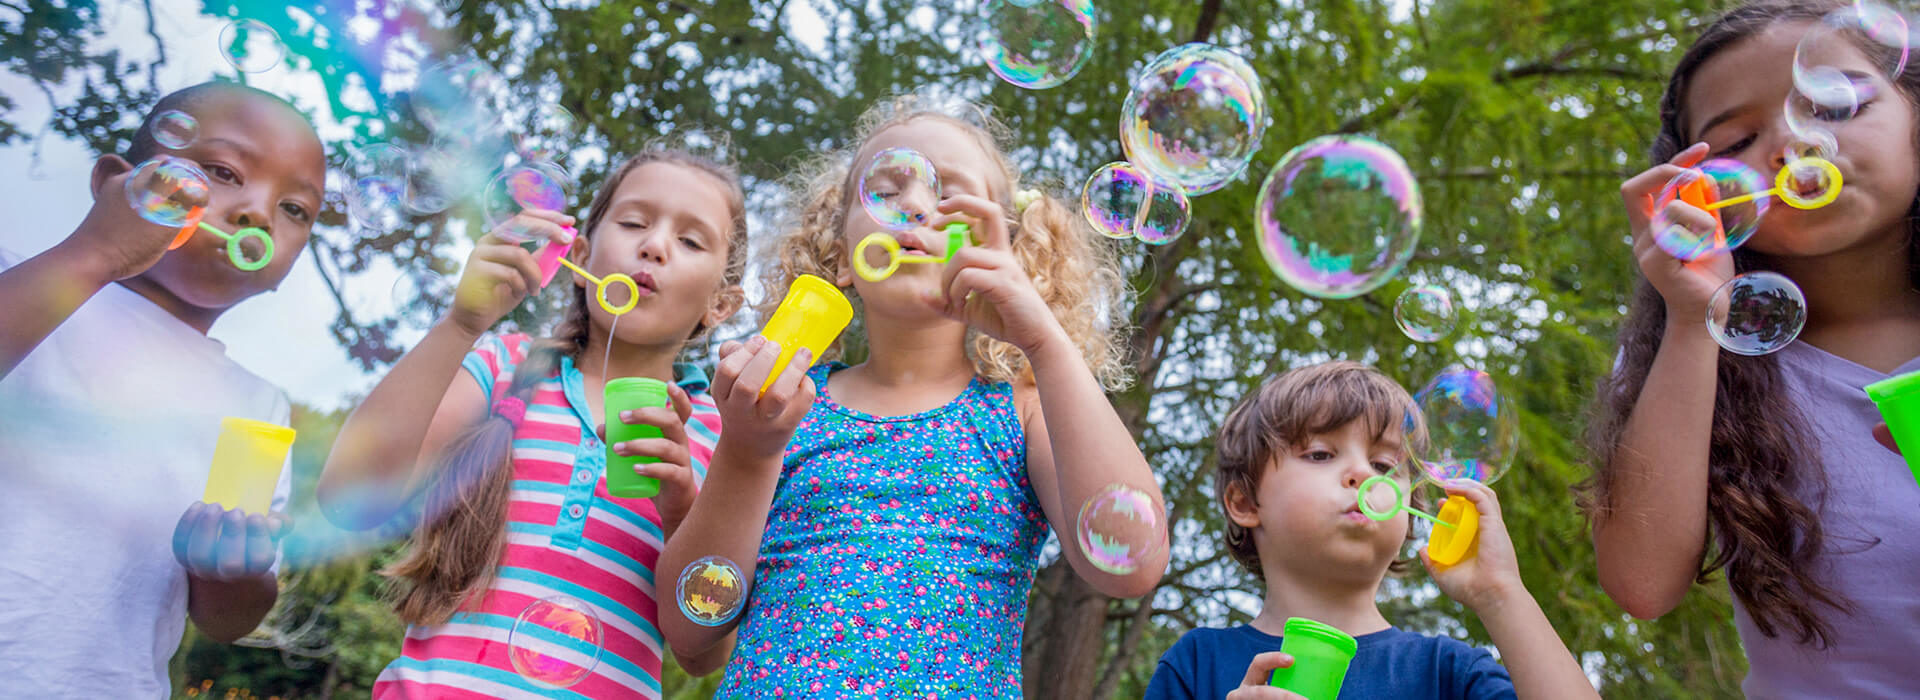 Kids blowing bubbles in park